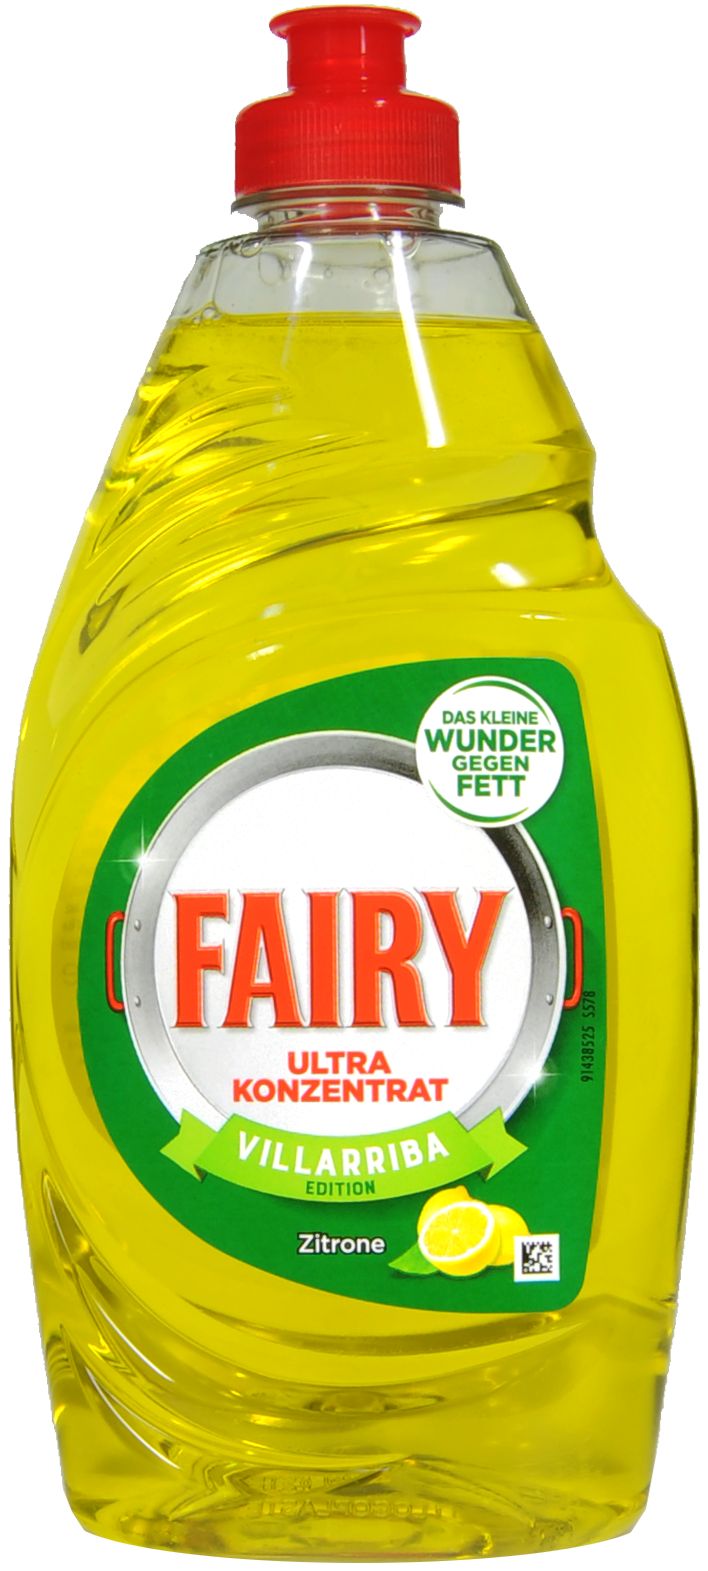 Fairy Handspülmittel Ultra Konzentrat Zitrone